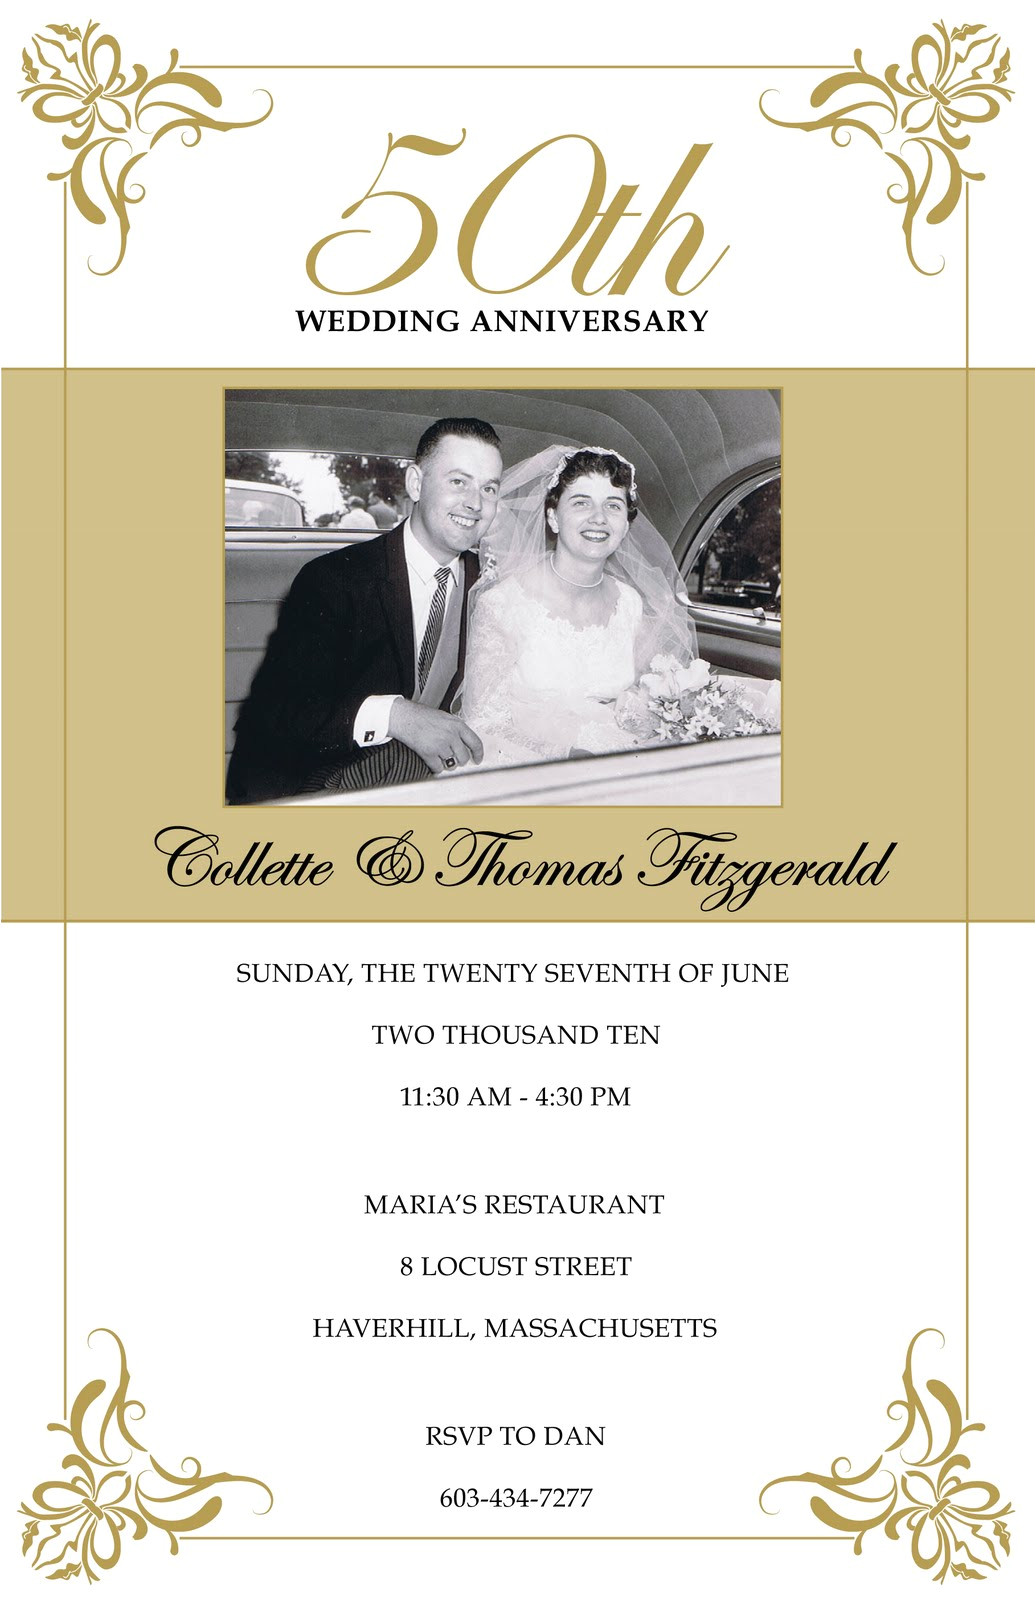 50th wedding anniversary invitations walmart jpg